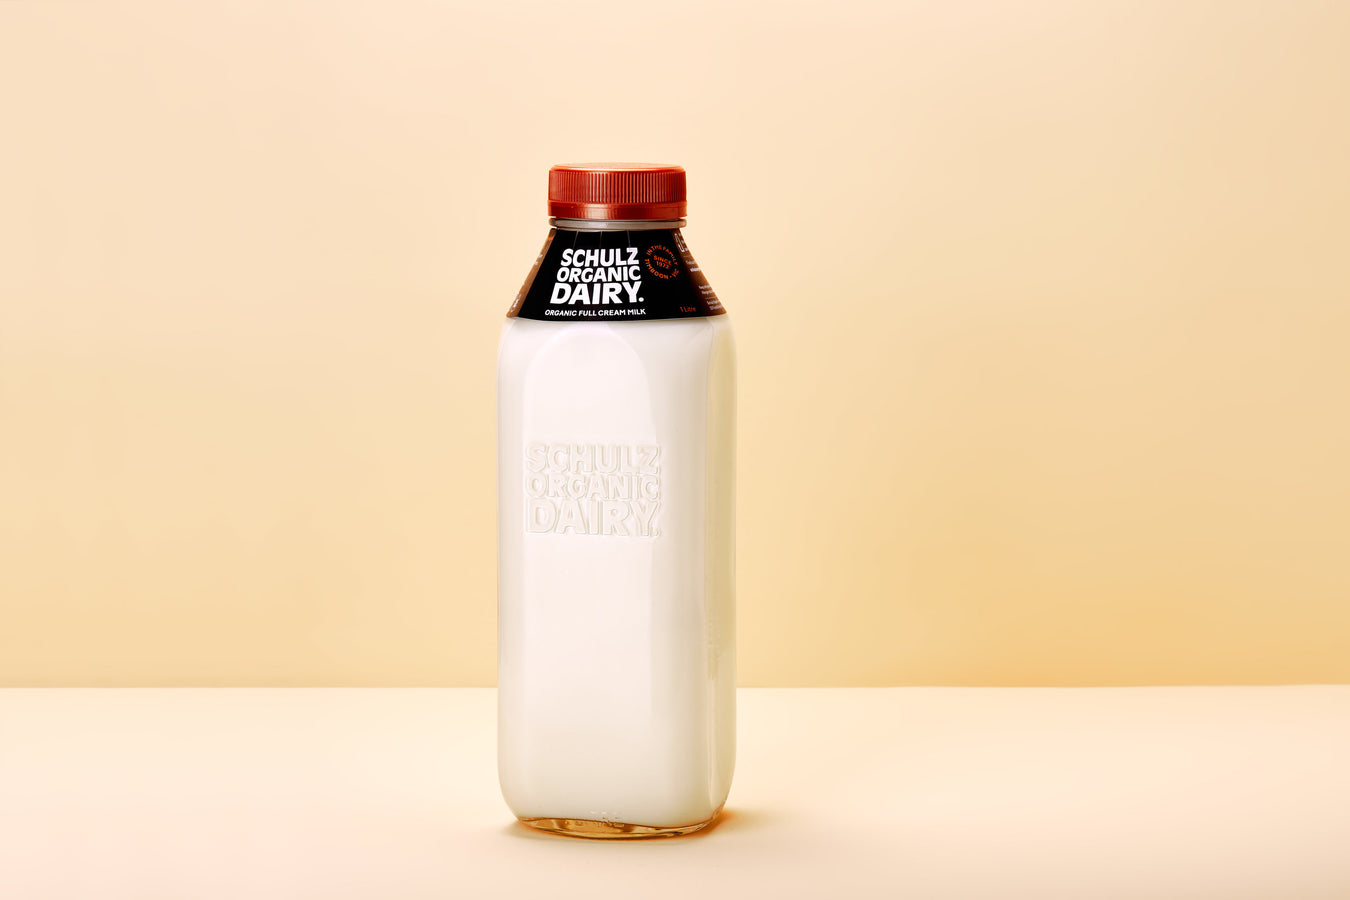 Schulz milk bottle packaging design